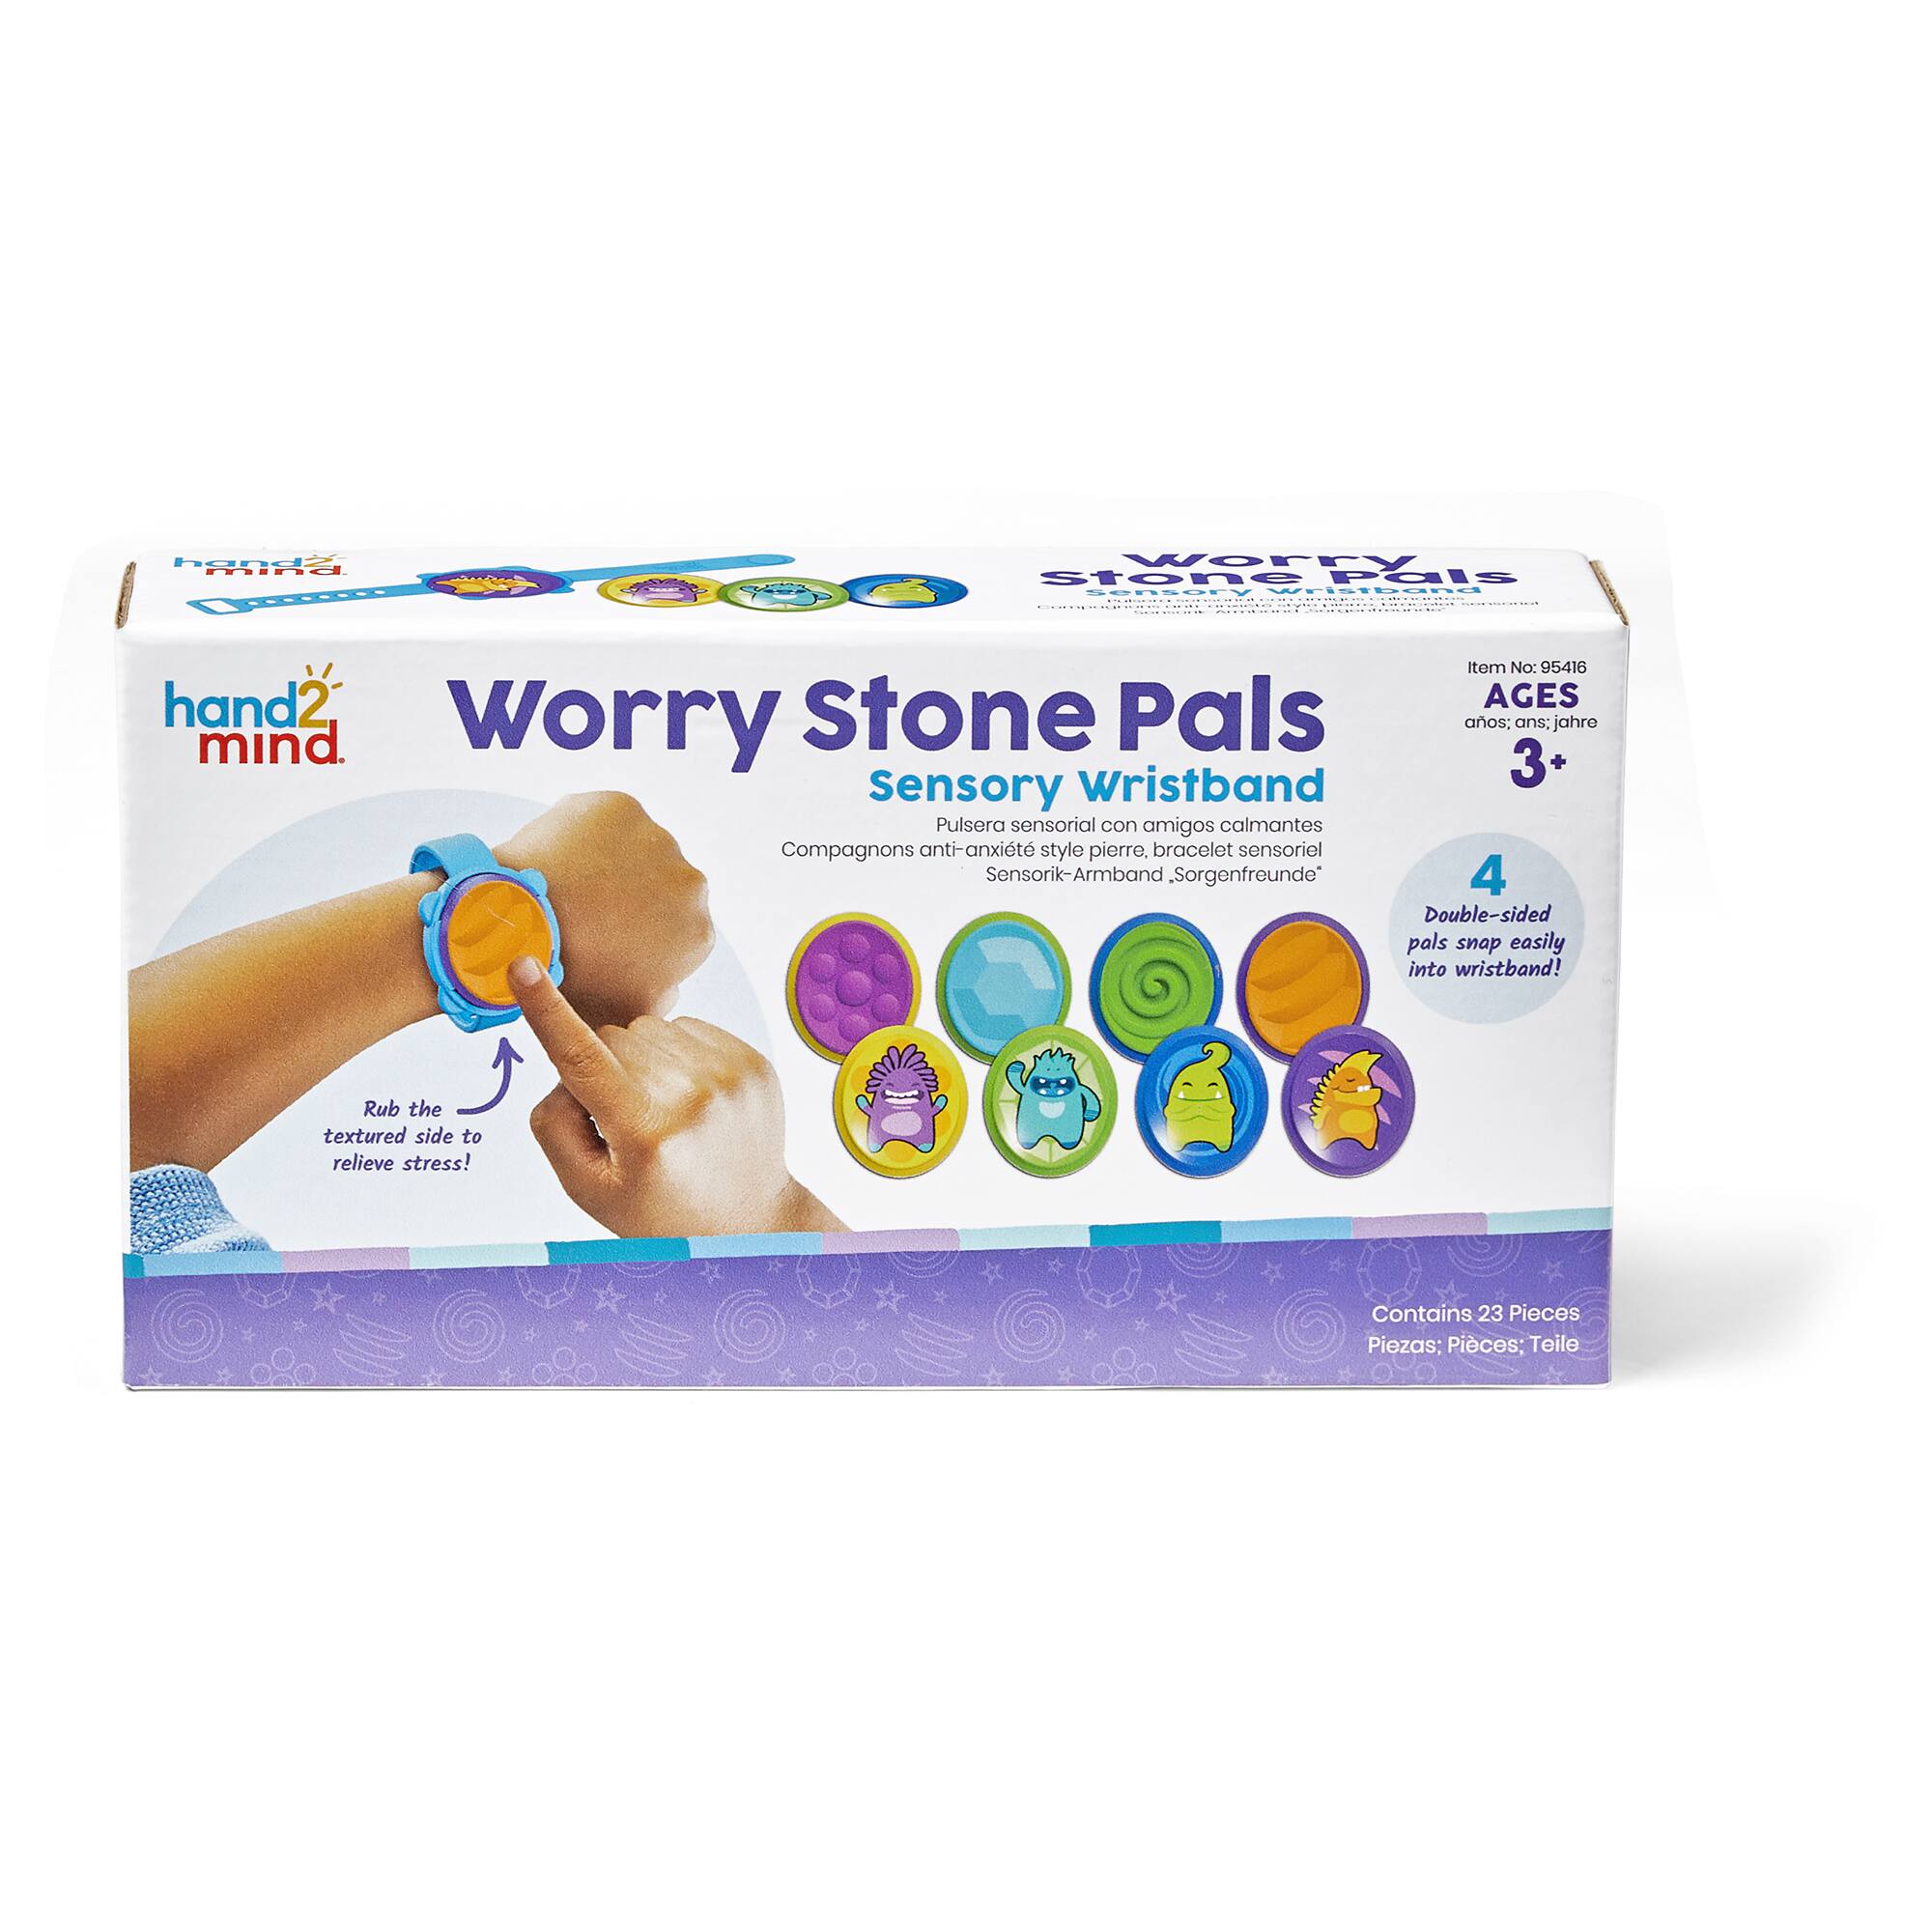 hand2mind Worry Stone Pals Sensory Wristband Set